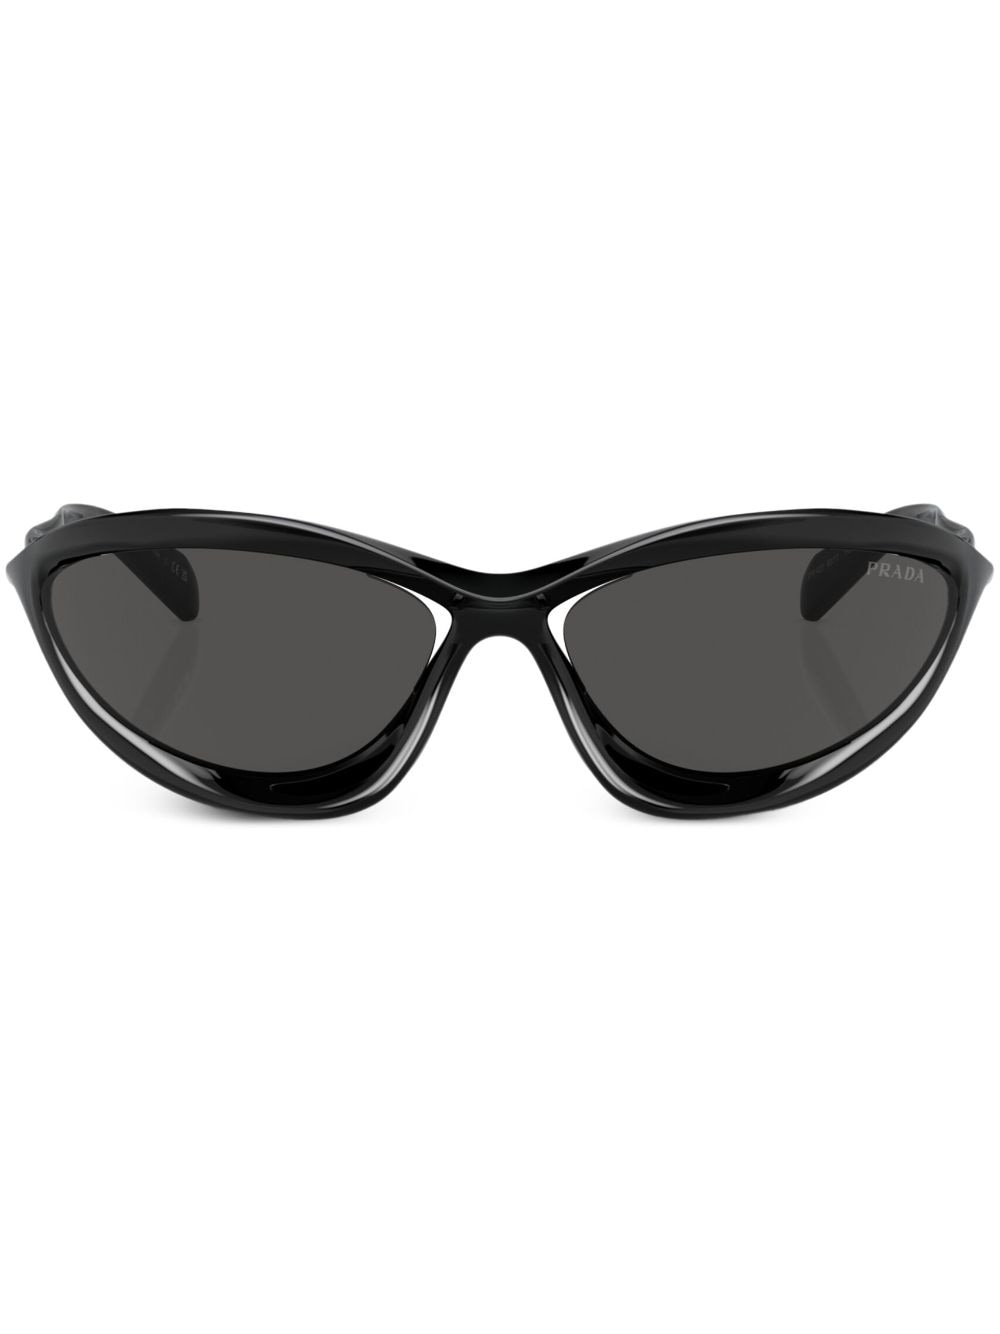 Prada Eyewear Prada PR A23S aviator frame sunglasses - Black von Prada Eyewear